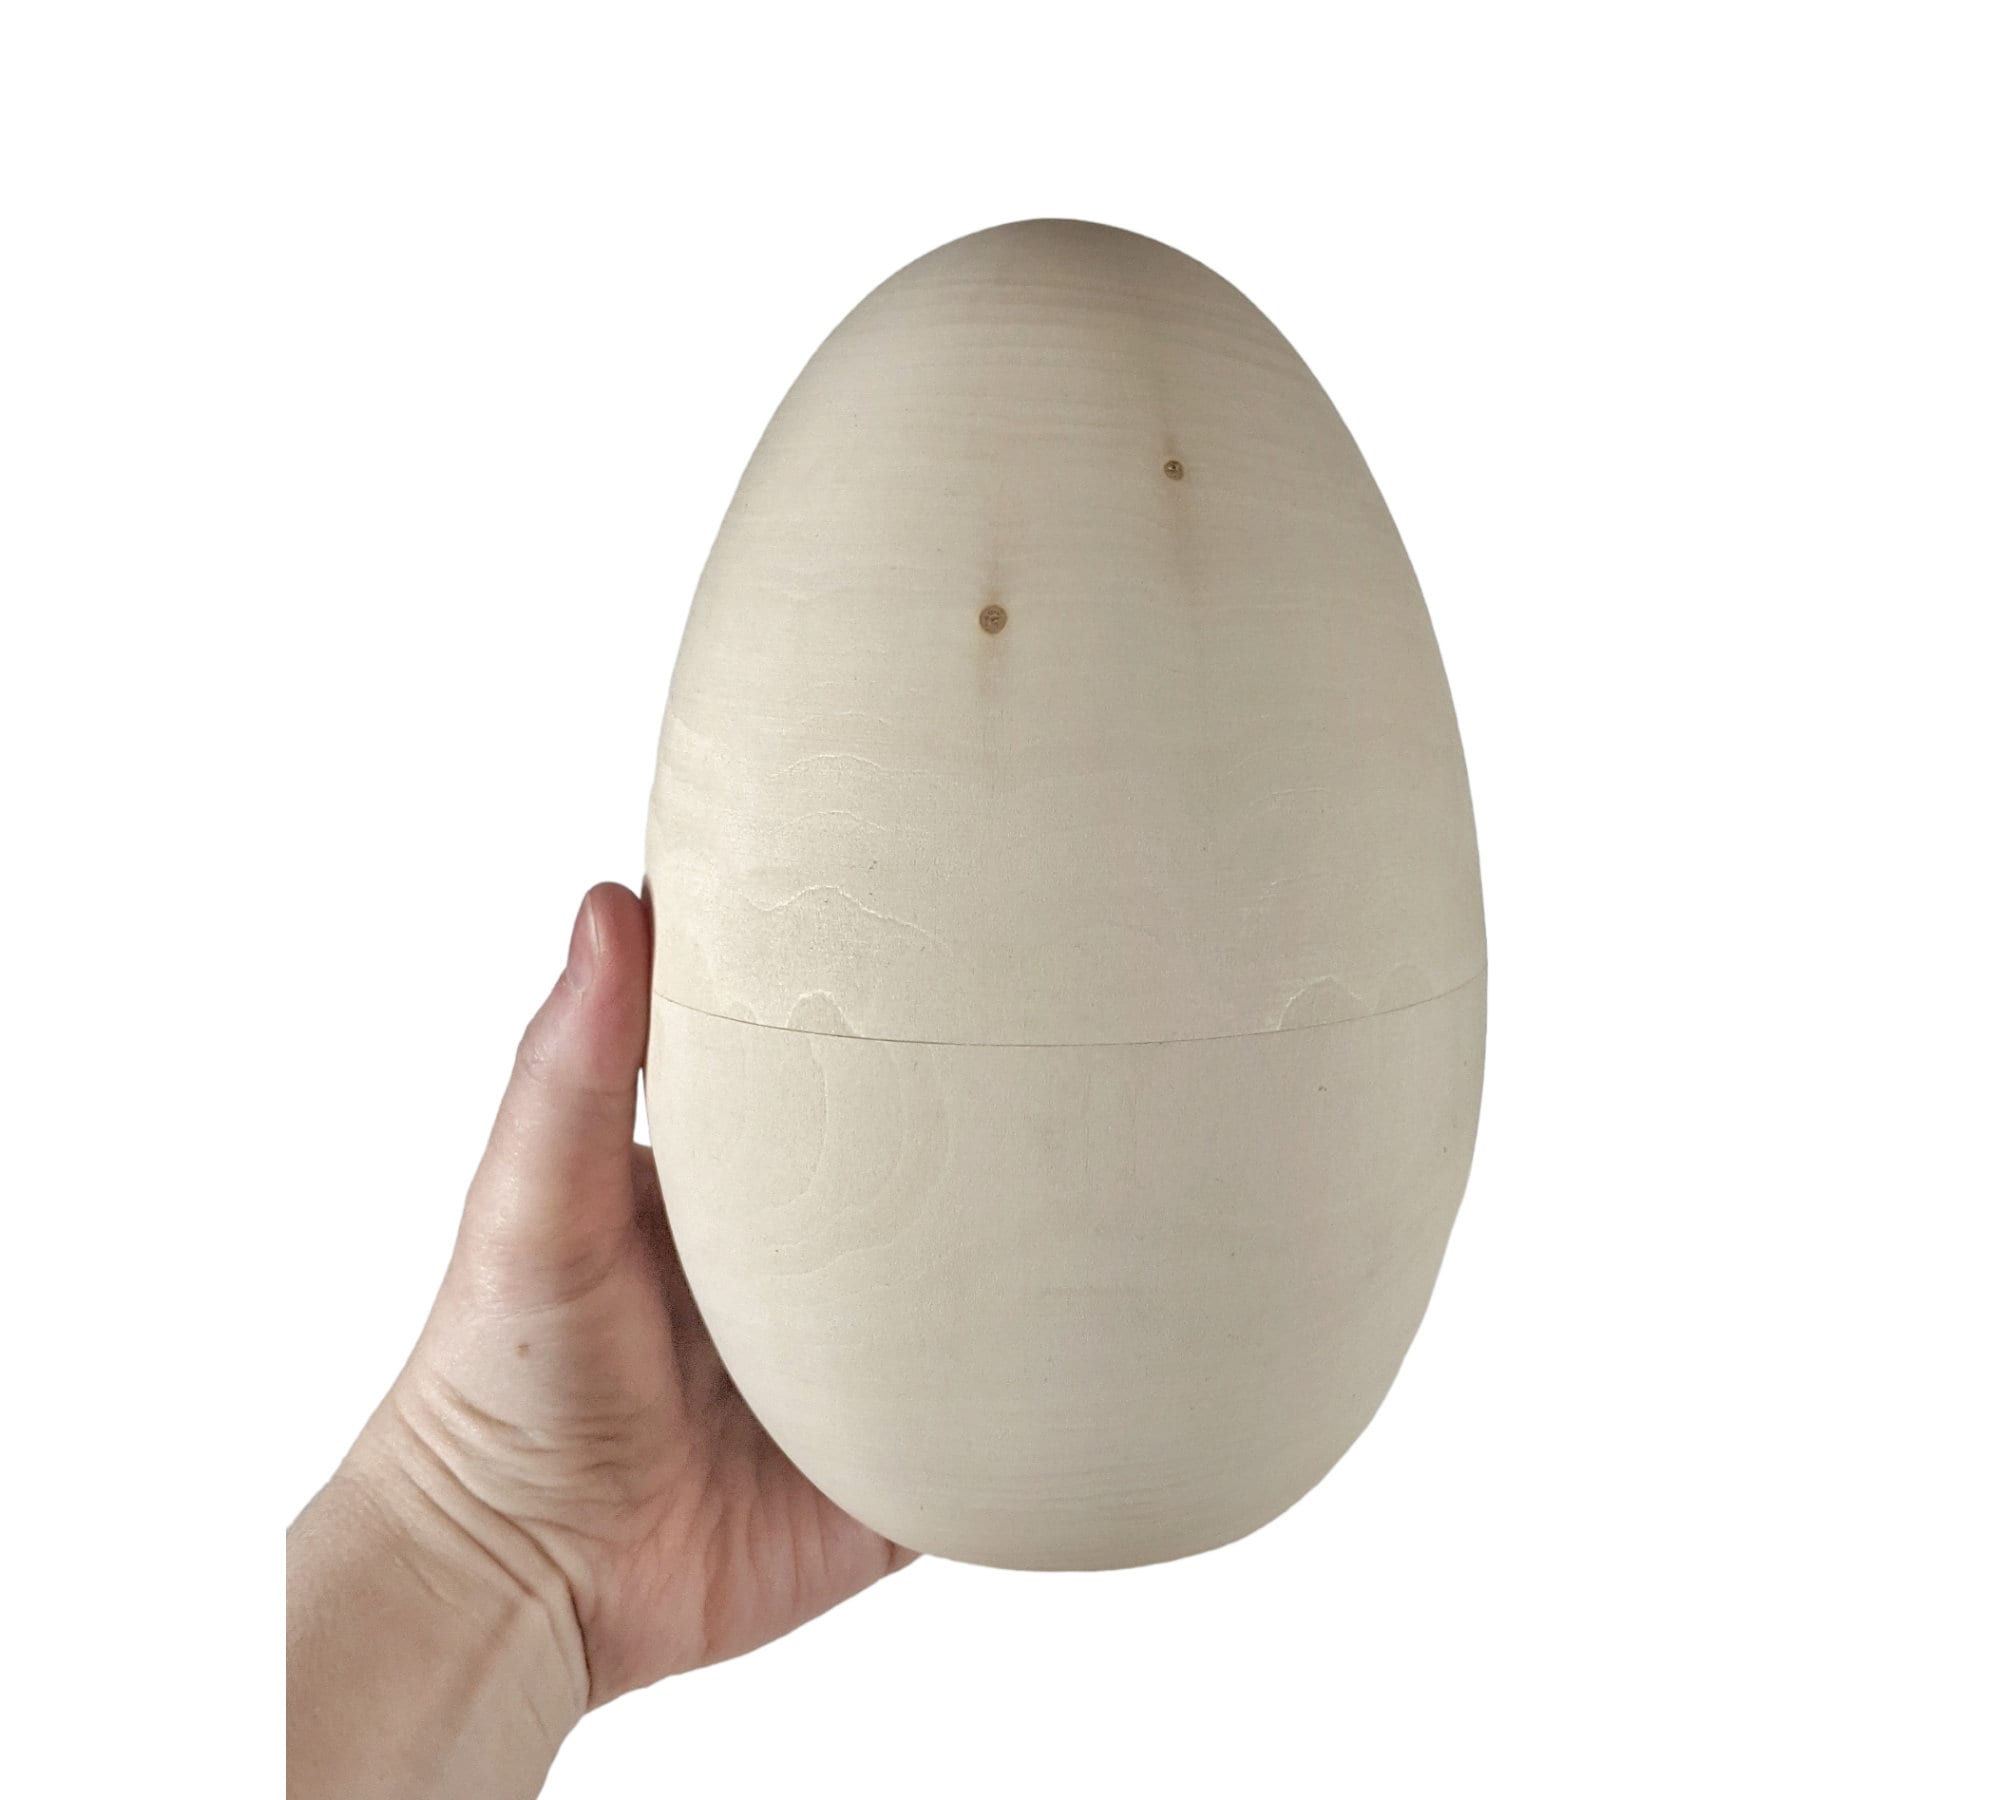 SECONDS SALE: Hollow wooden eggs